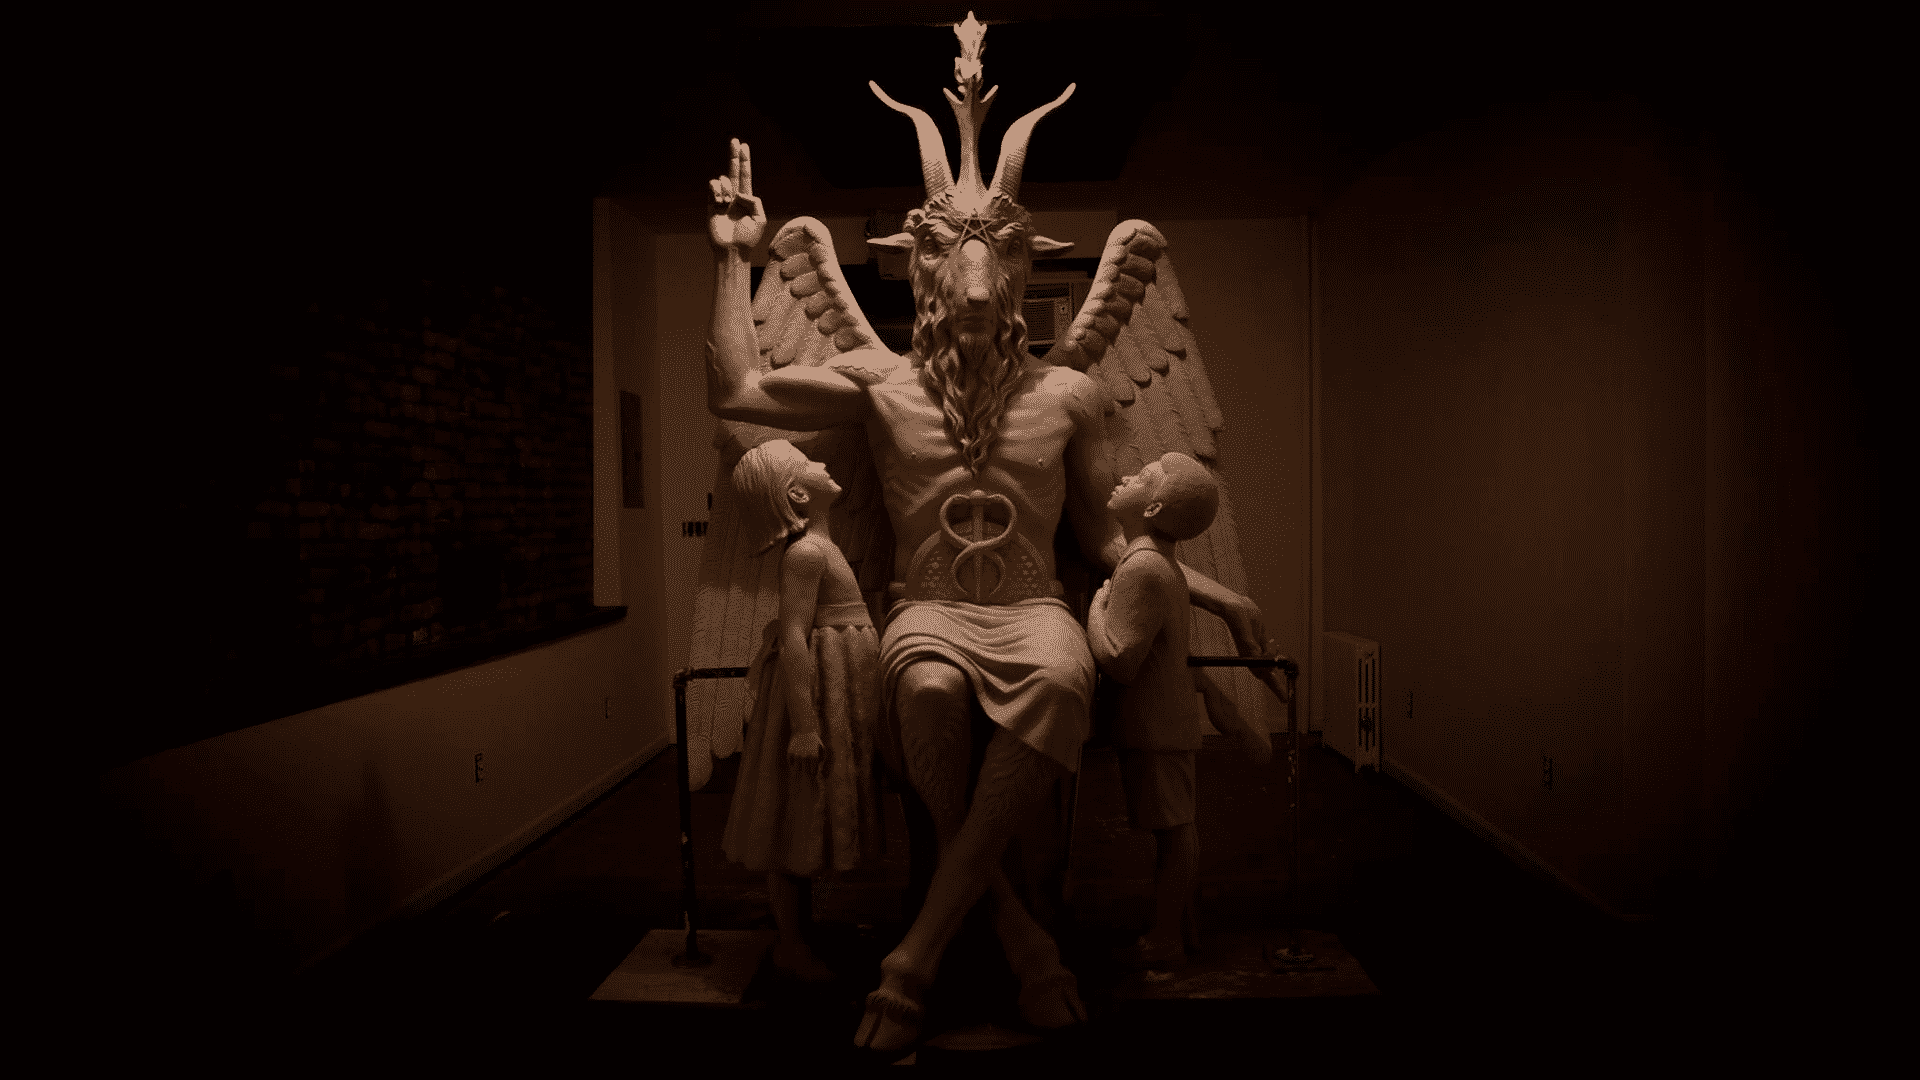 satanic temple žaluje netflix